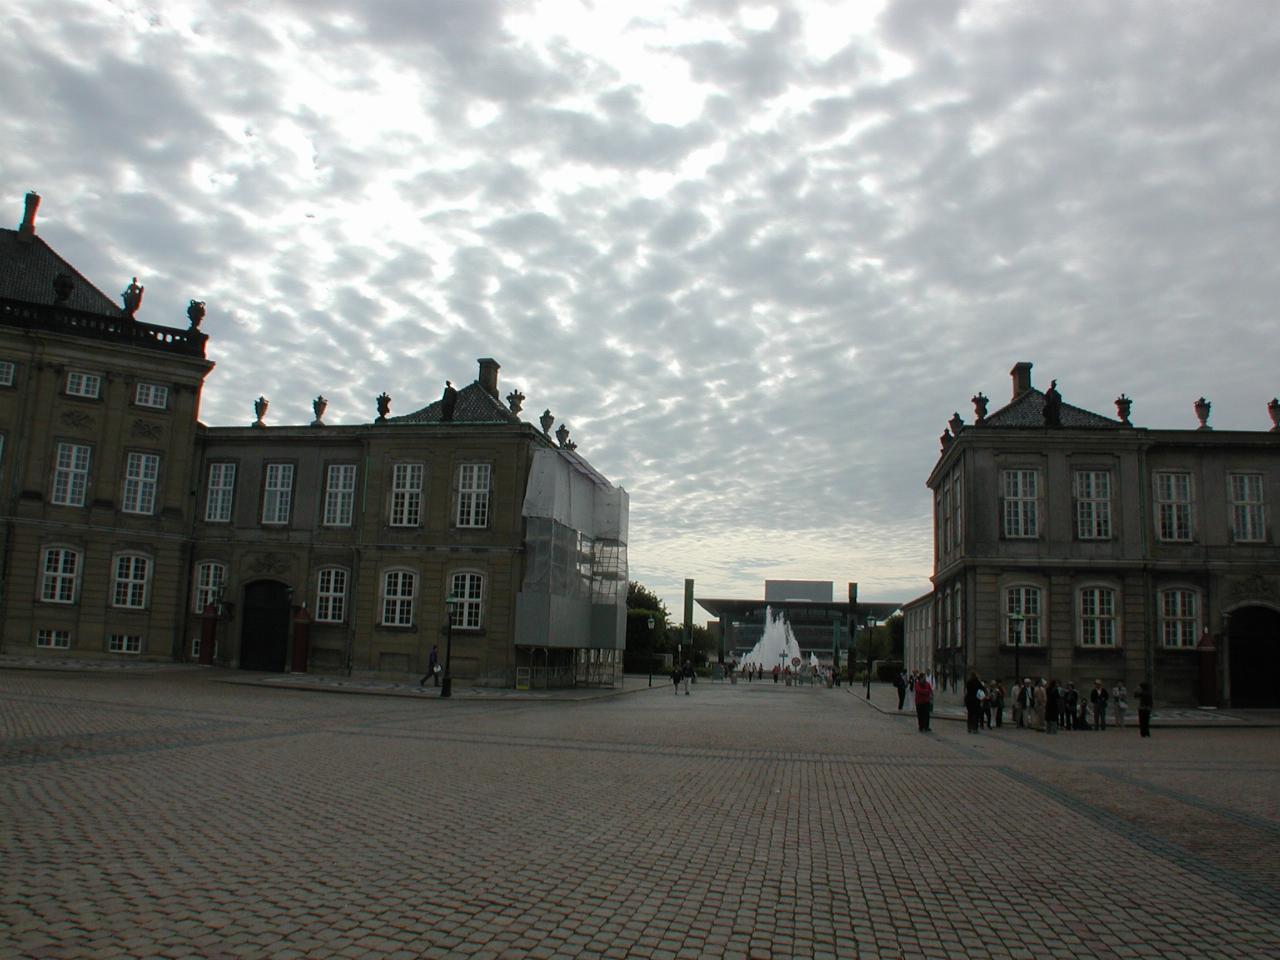 KPLU Viking Jazz: Amelienborg Plads (Plaza): Frederick VIII's Palace & Christian IX's (panorama 2/4)